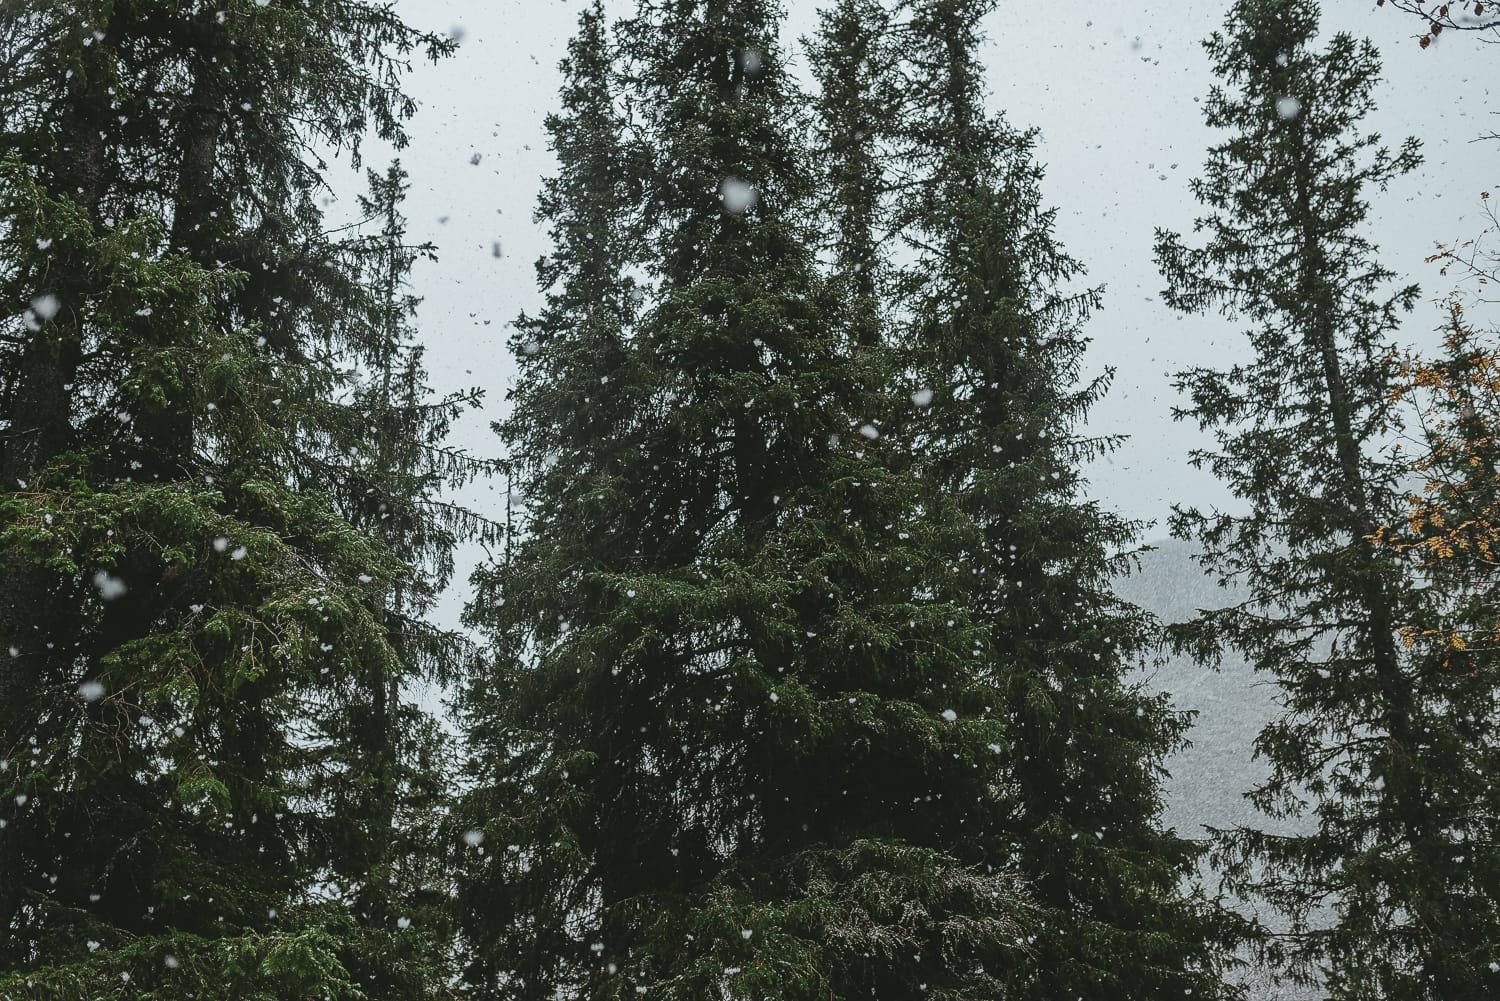 snowfall and fir trees